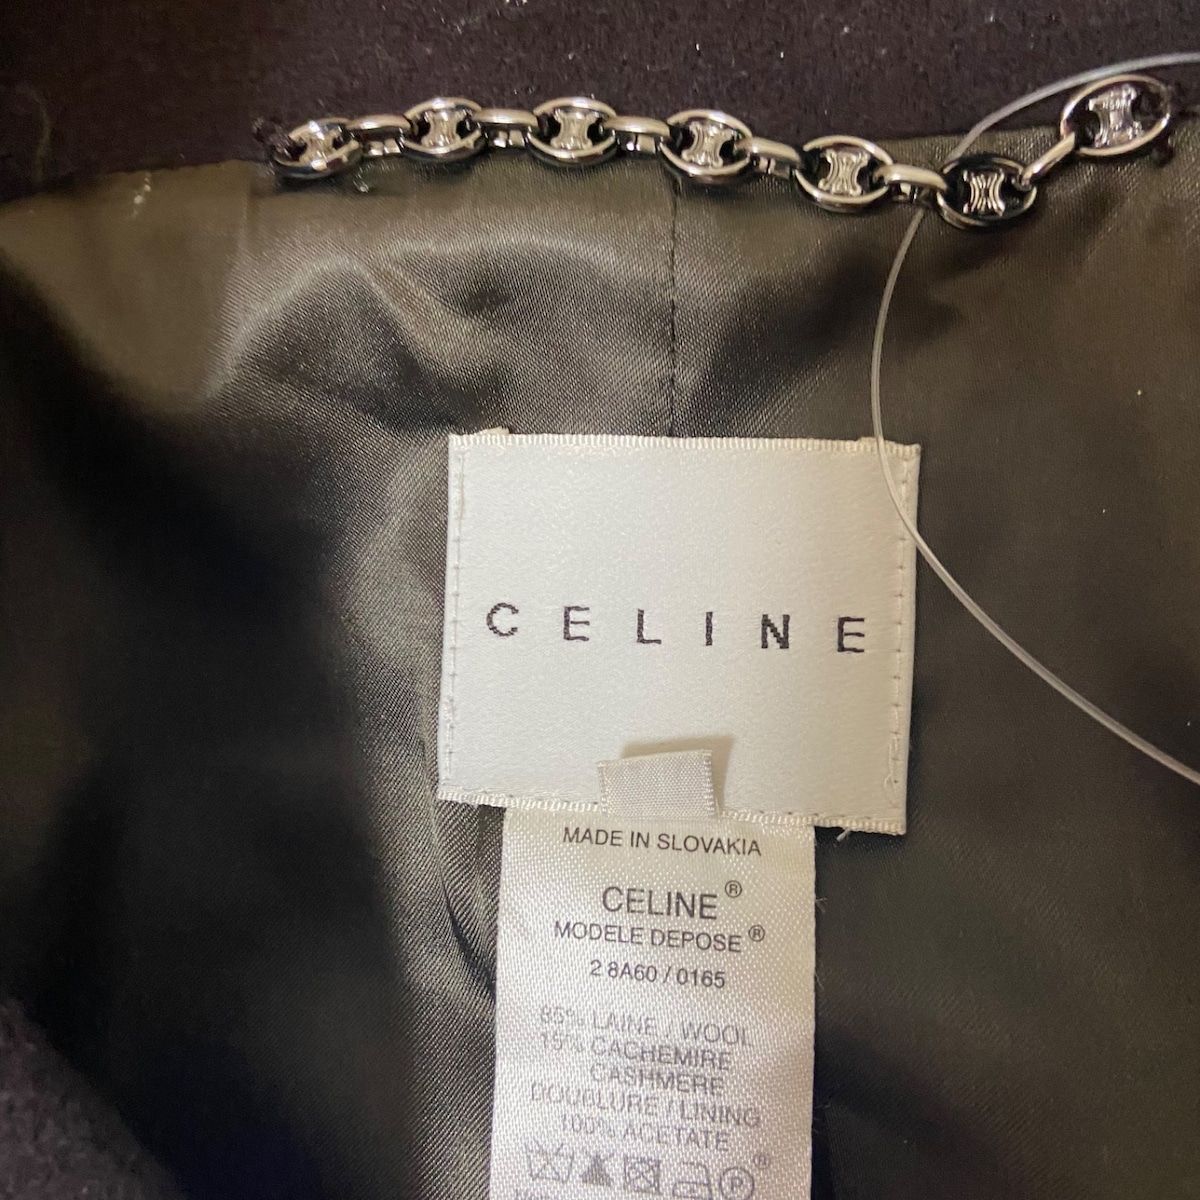 CELINE(セリーヌ) コート サイズ38 M レディース - 28A60/0165 ダーク ...